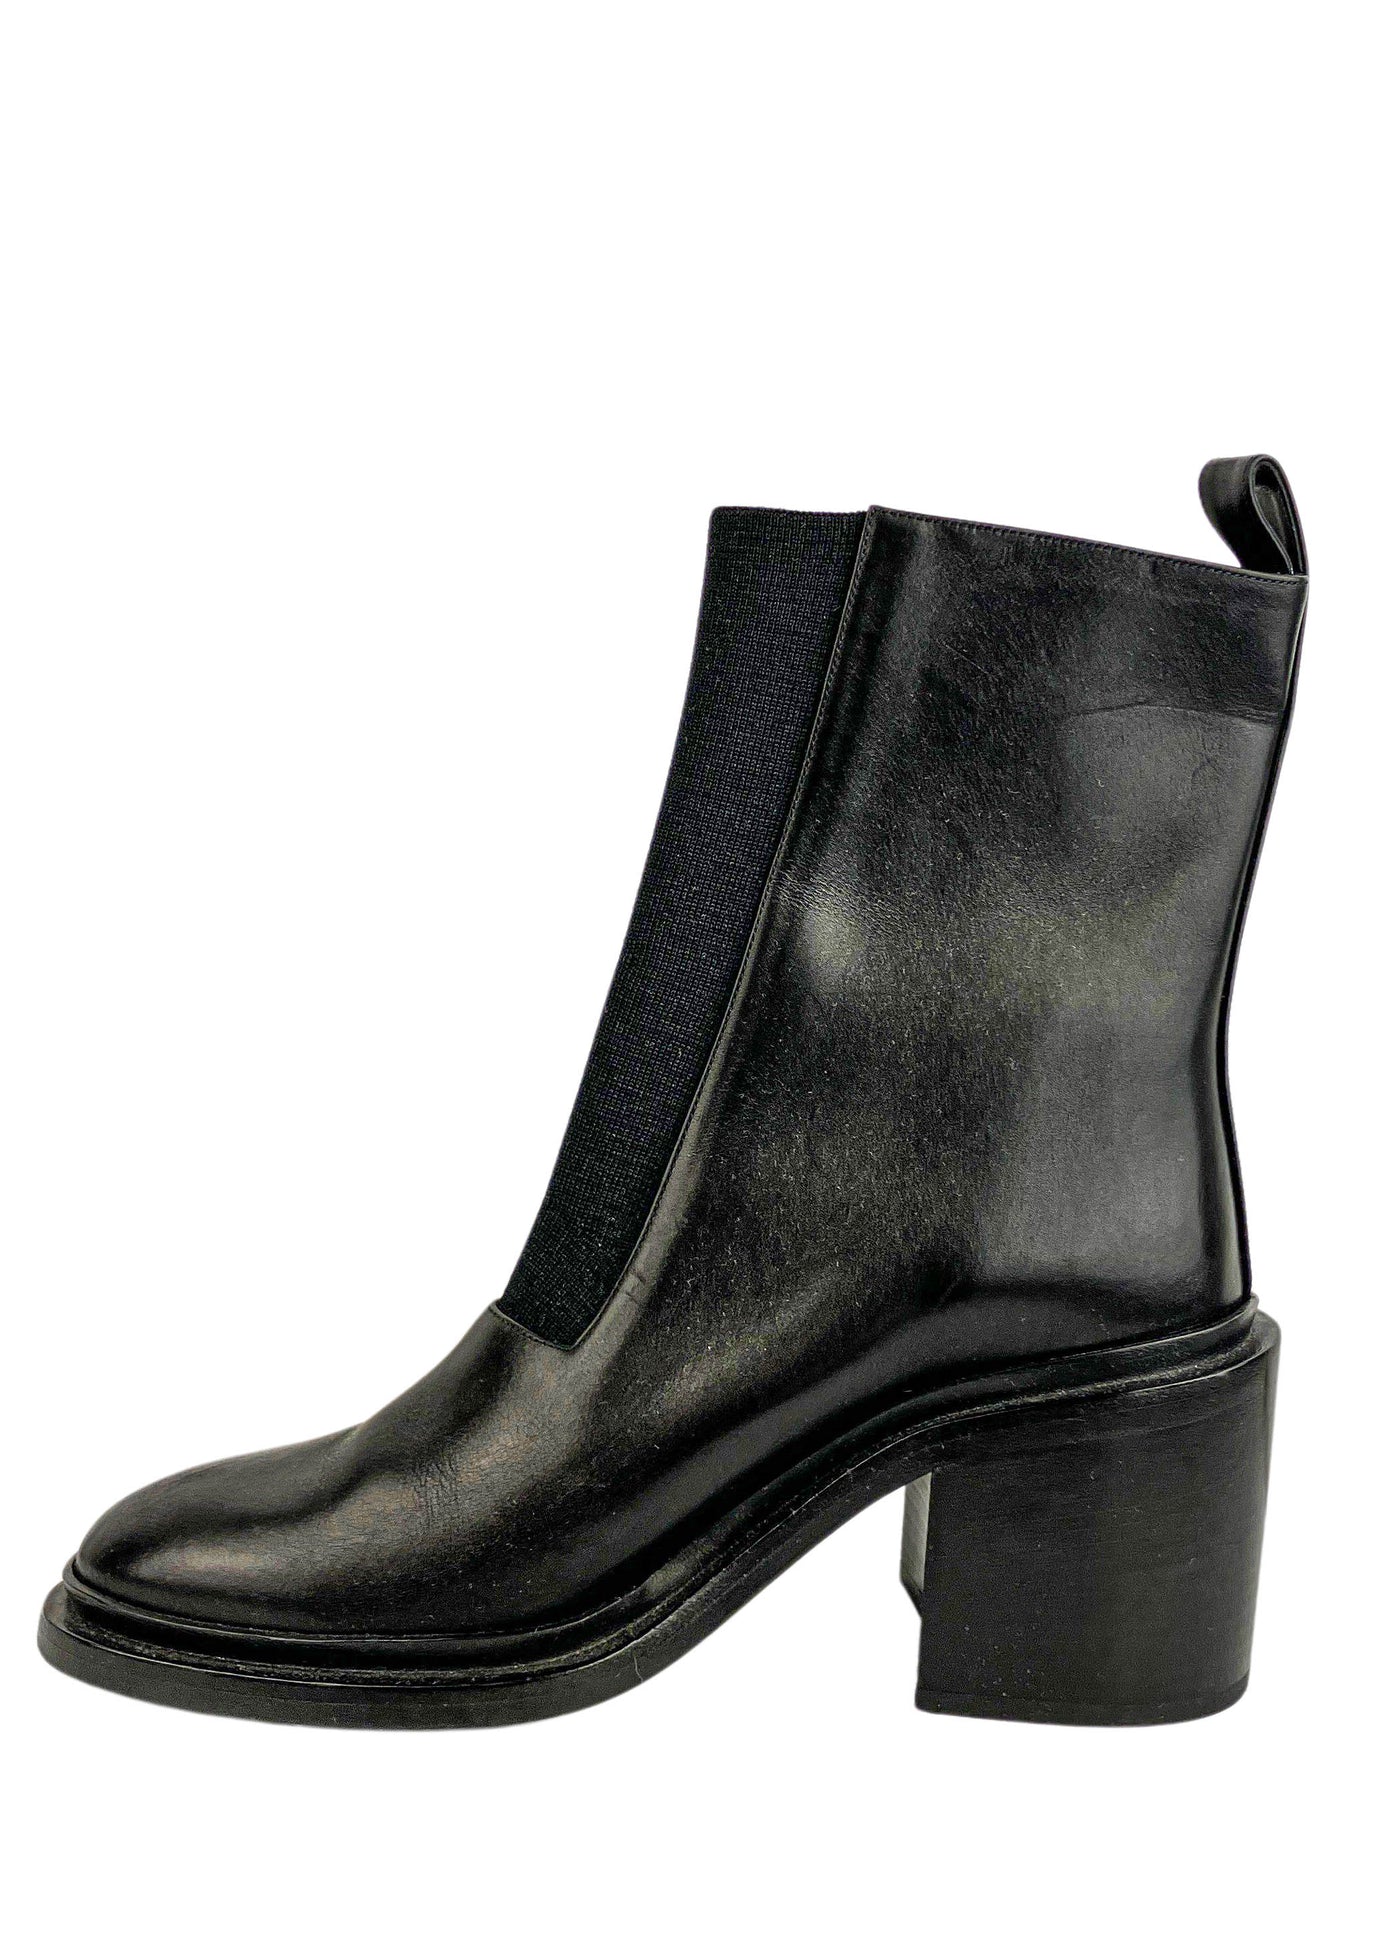 Jil Sander Leather Block Heel Ankle Boots in Black - Discounts on Jil Sander at UAL